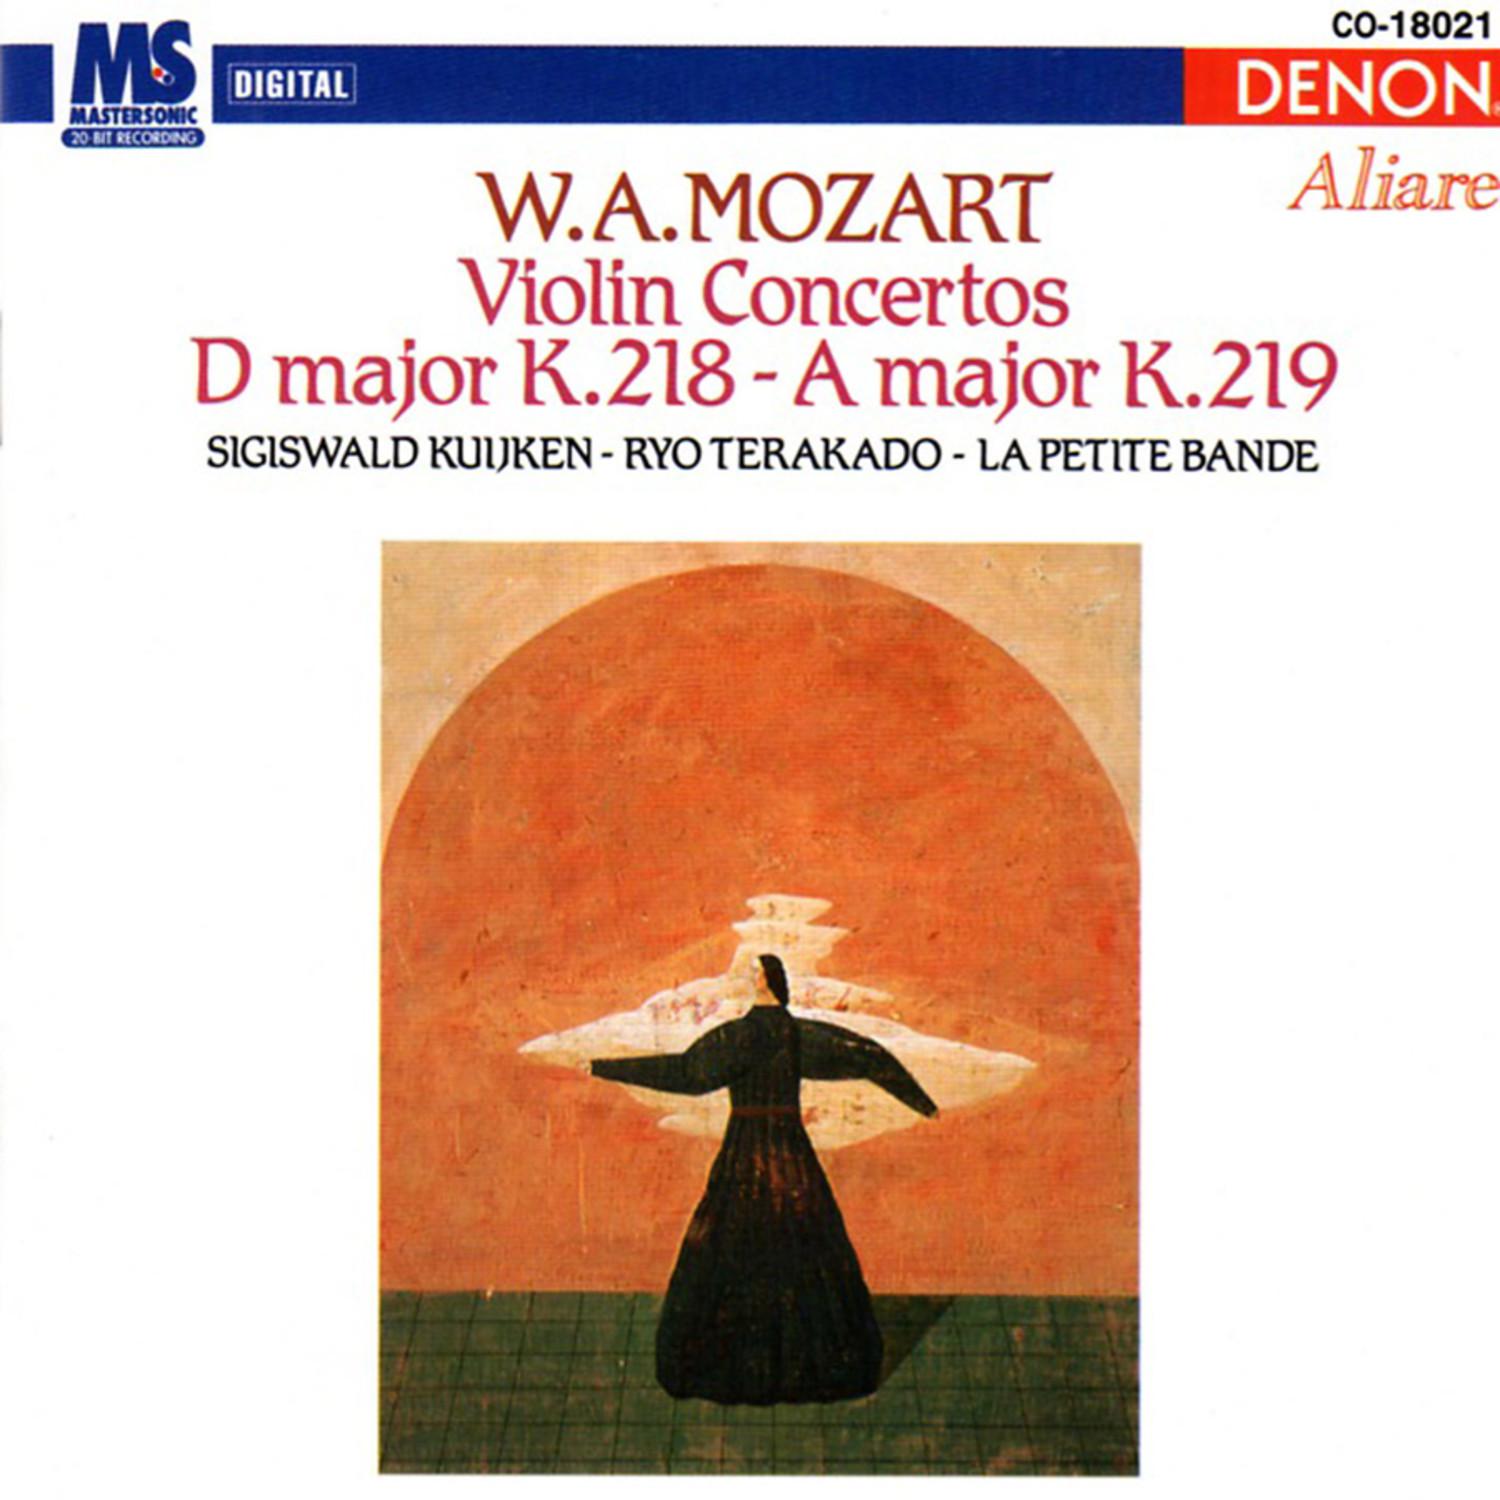 Concerto for Violin & Orchestra in D Major, K.218: II. Andante cantabile